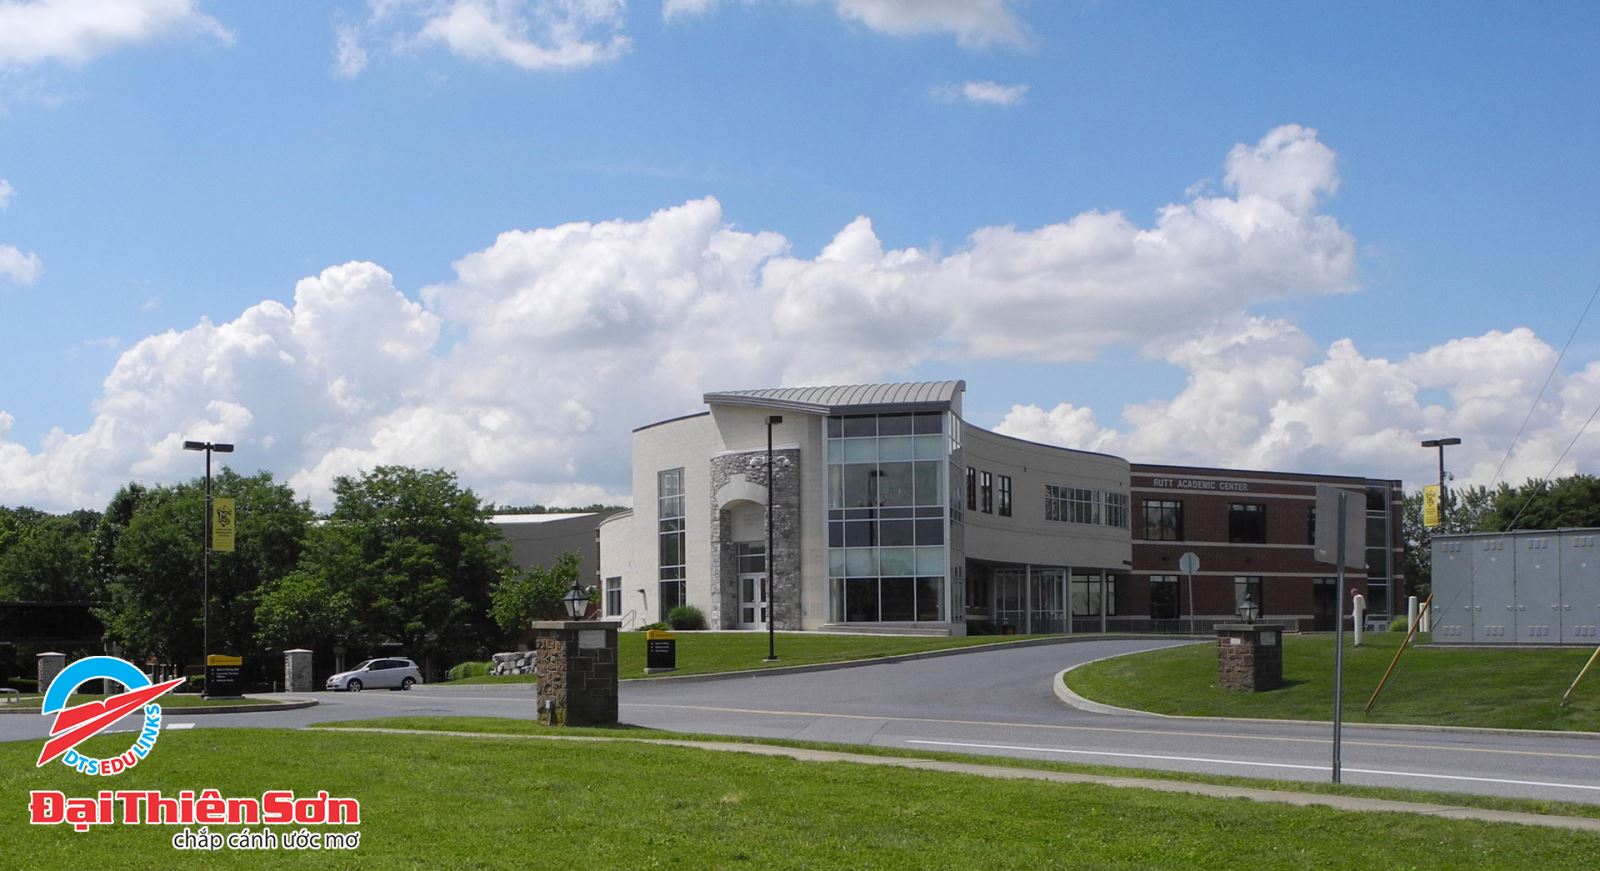 Lancaster Mennonite Academy